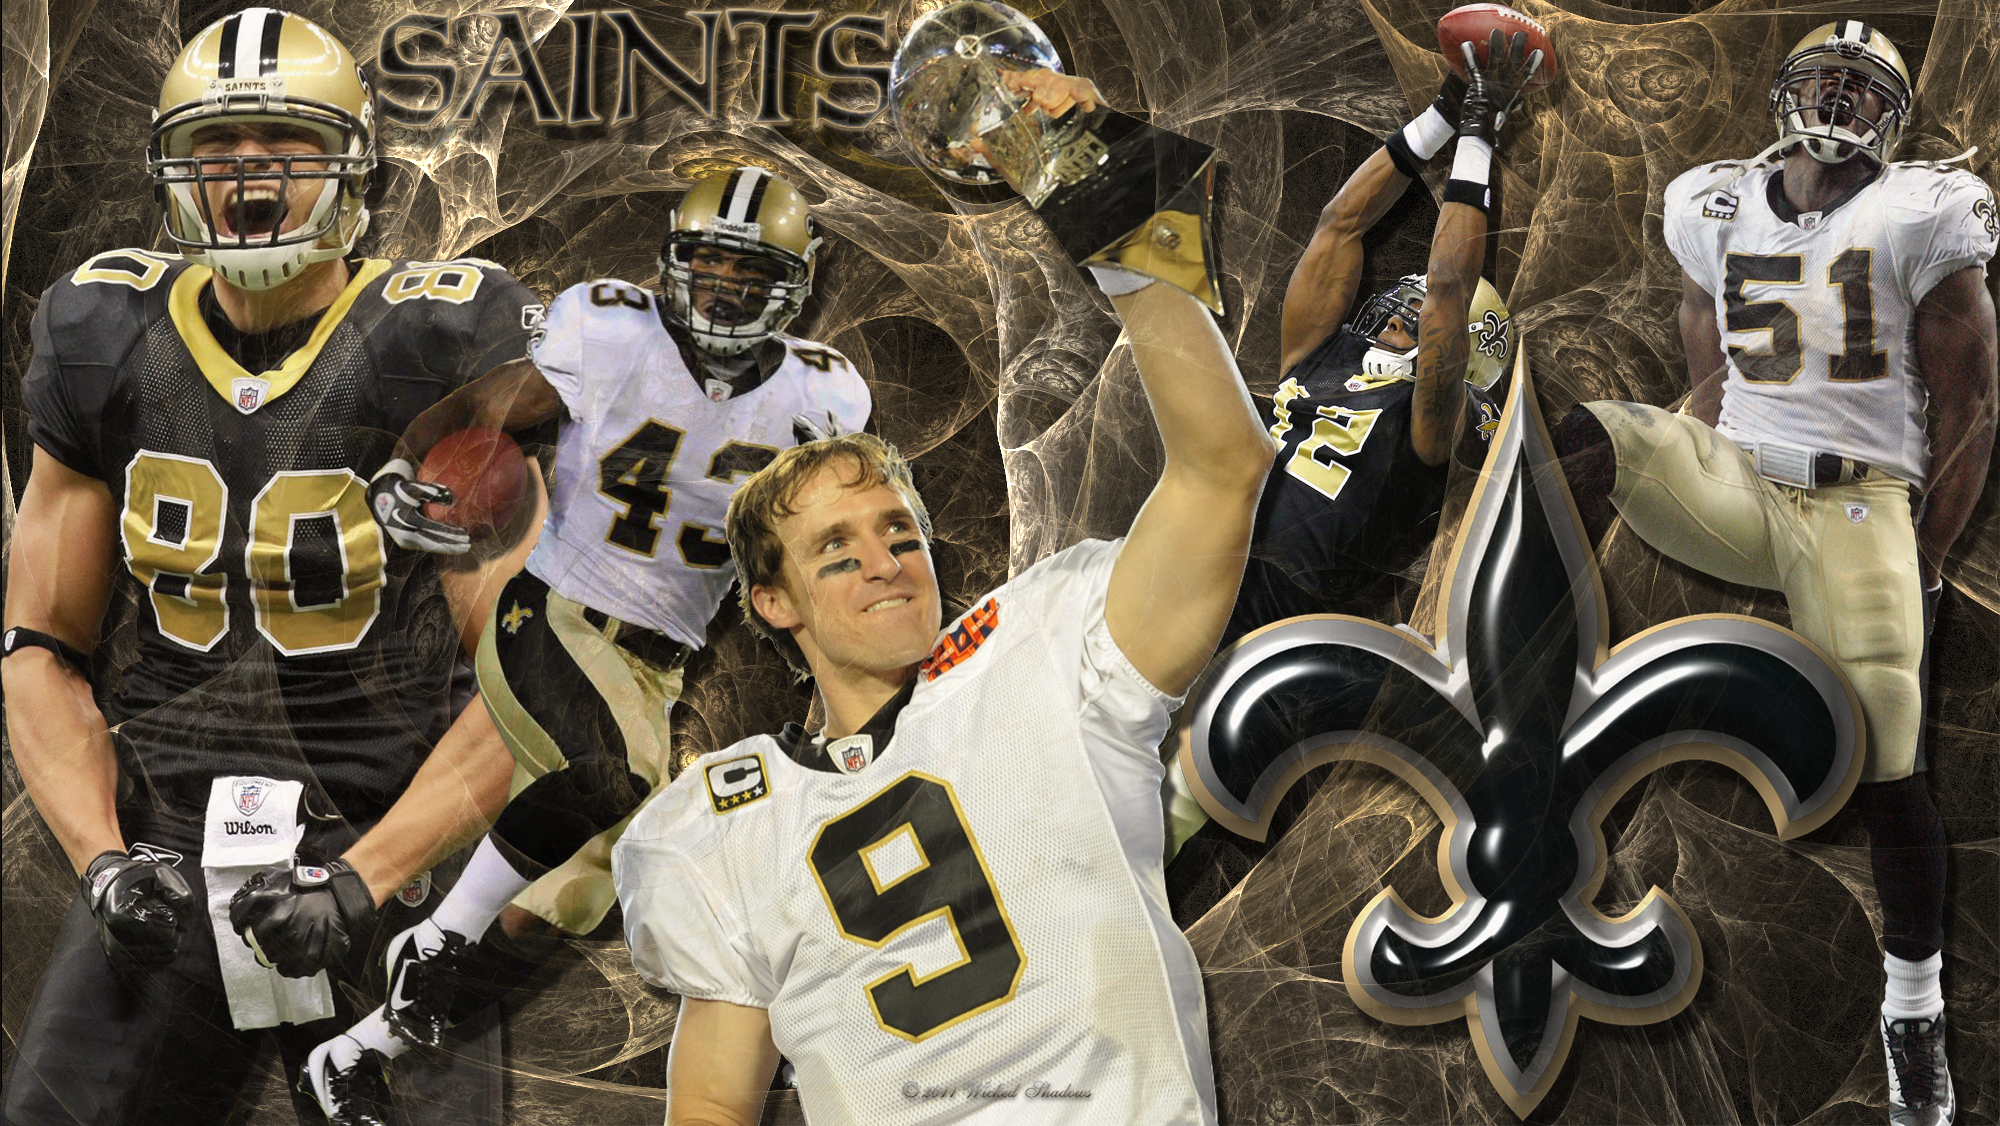 New Orleans Saints Wallpaper Background Image